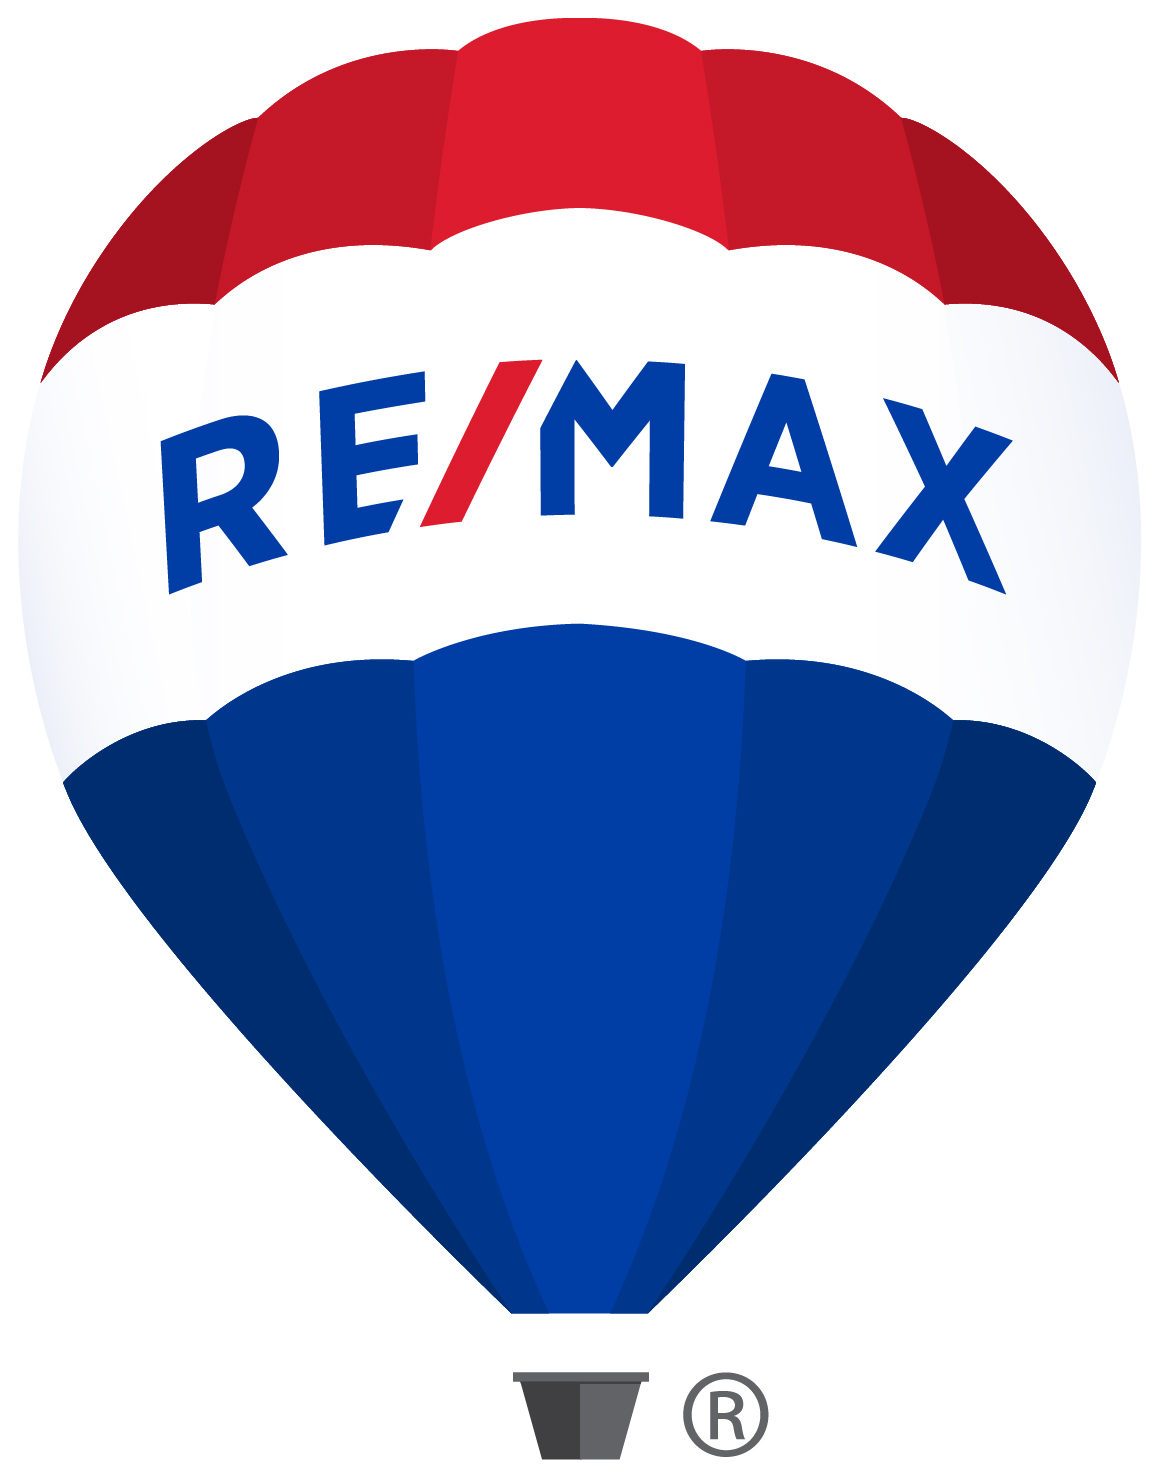 REMAX Services